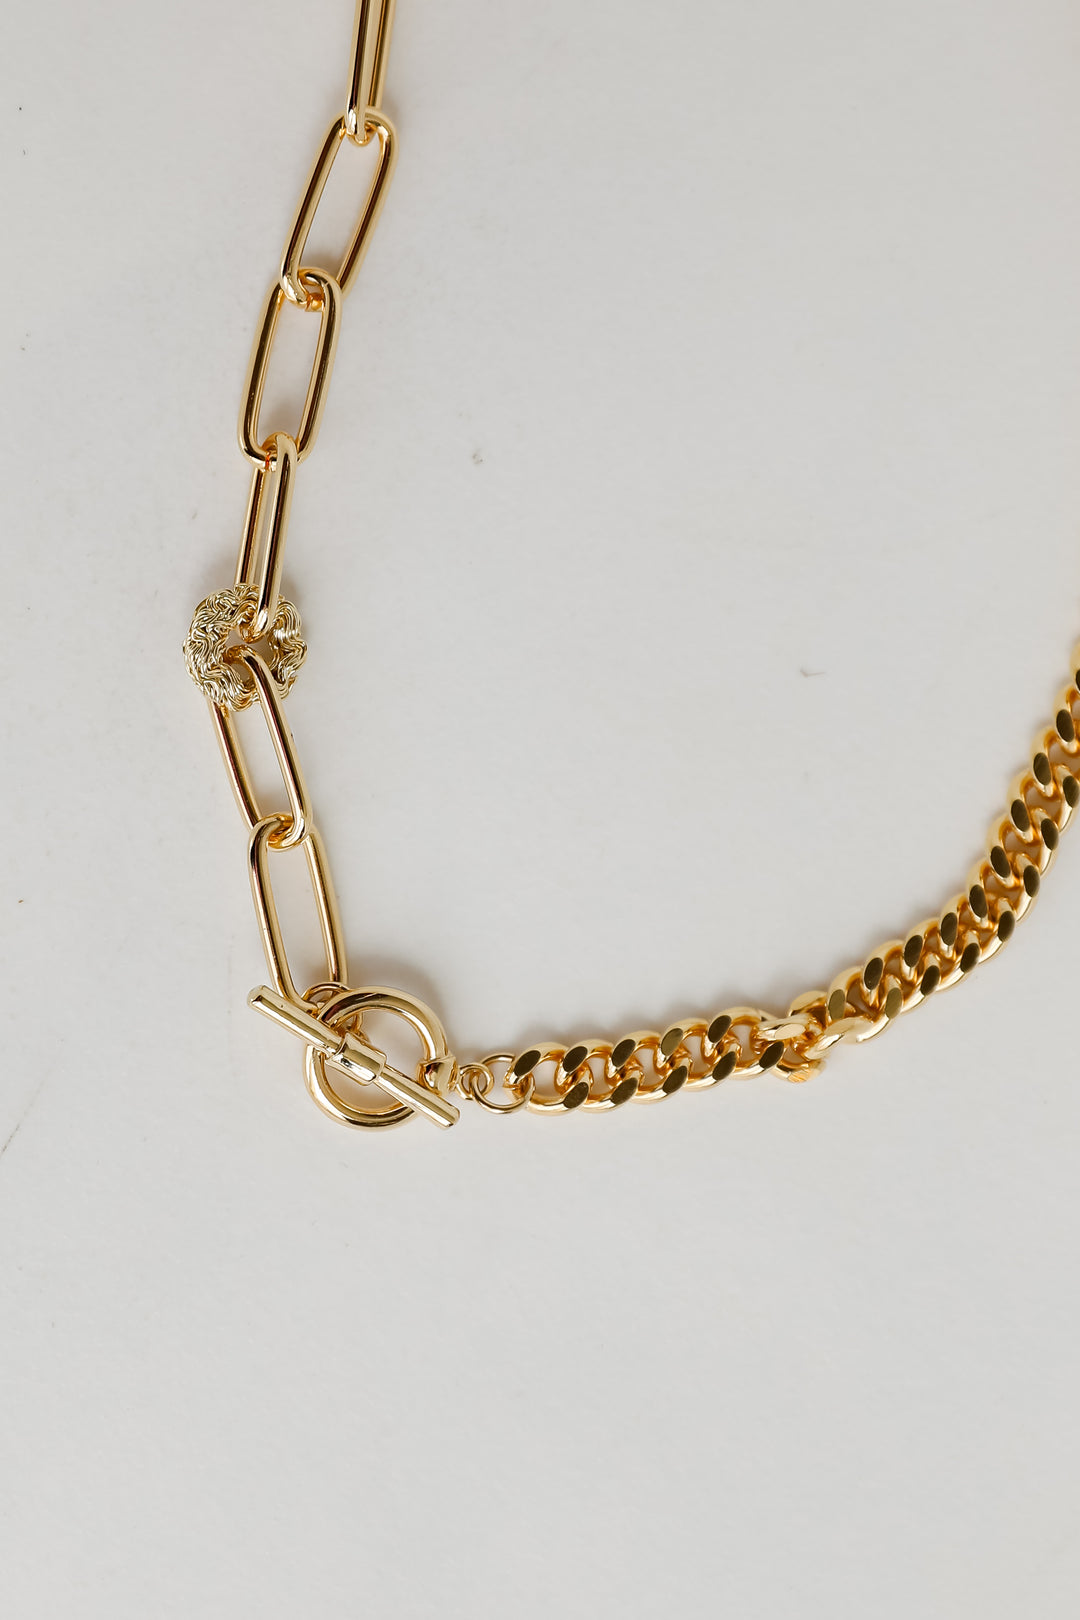 Logan Gold Chain Necklace dainty jewelry